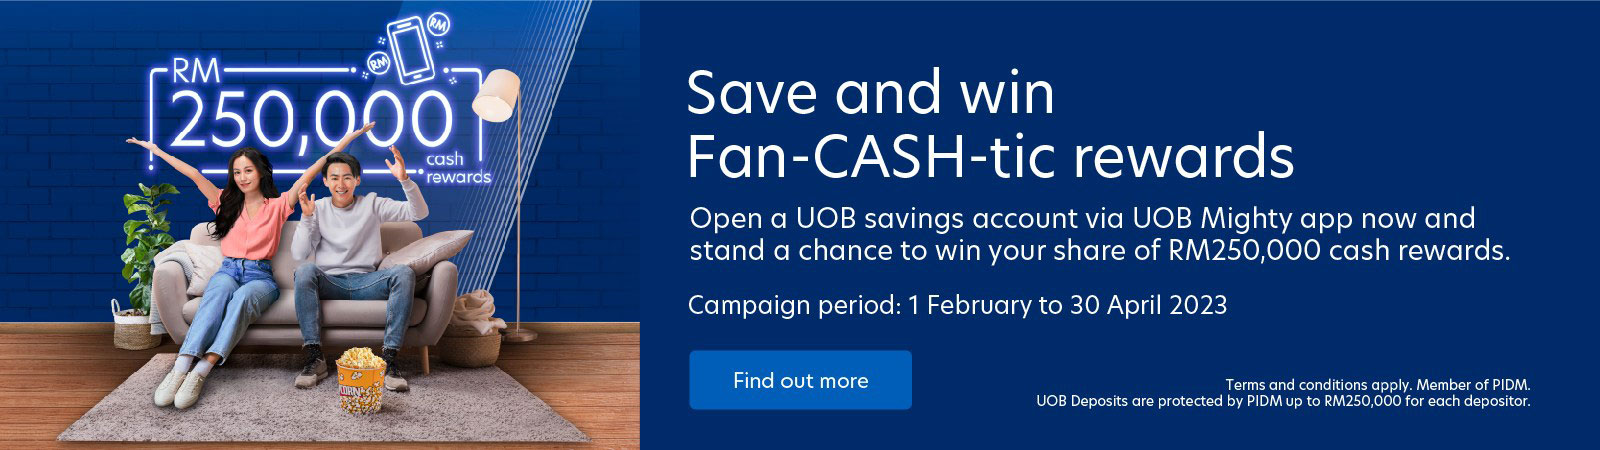 UOB Save and win Fan-CASH-tic rewards